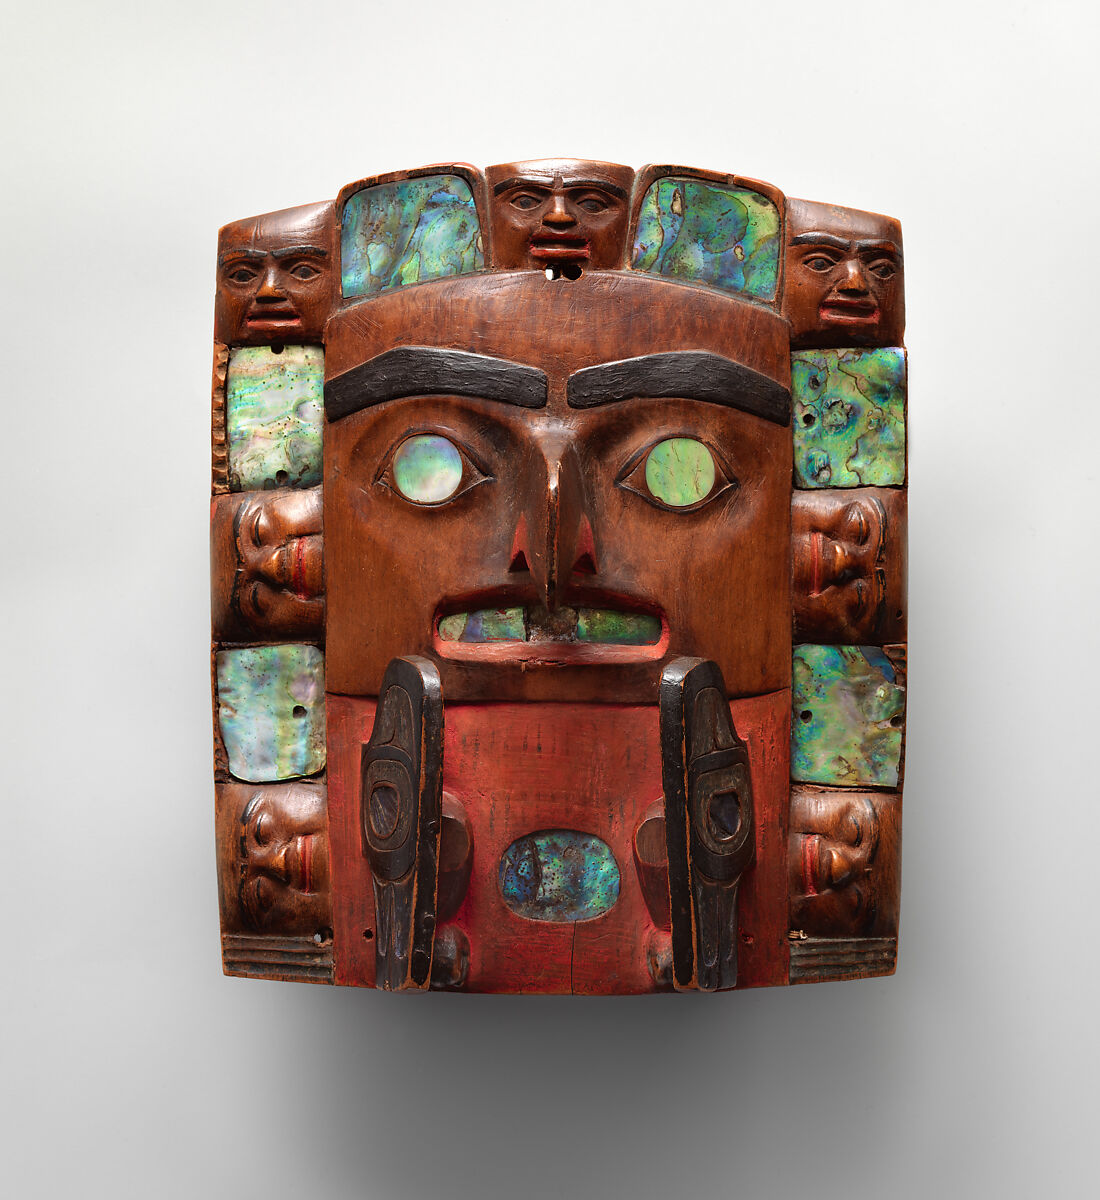 Headdress frontlet, Wood, abalone shell, pigment, and nails, Tsimshian
, Native American